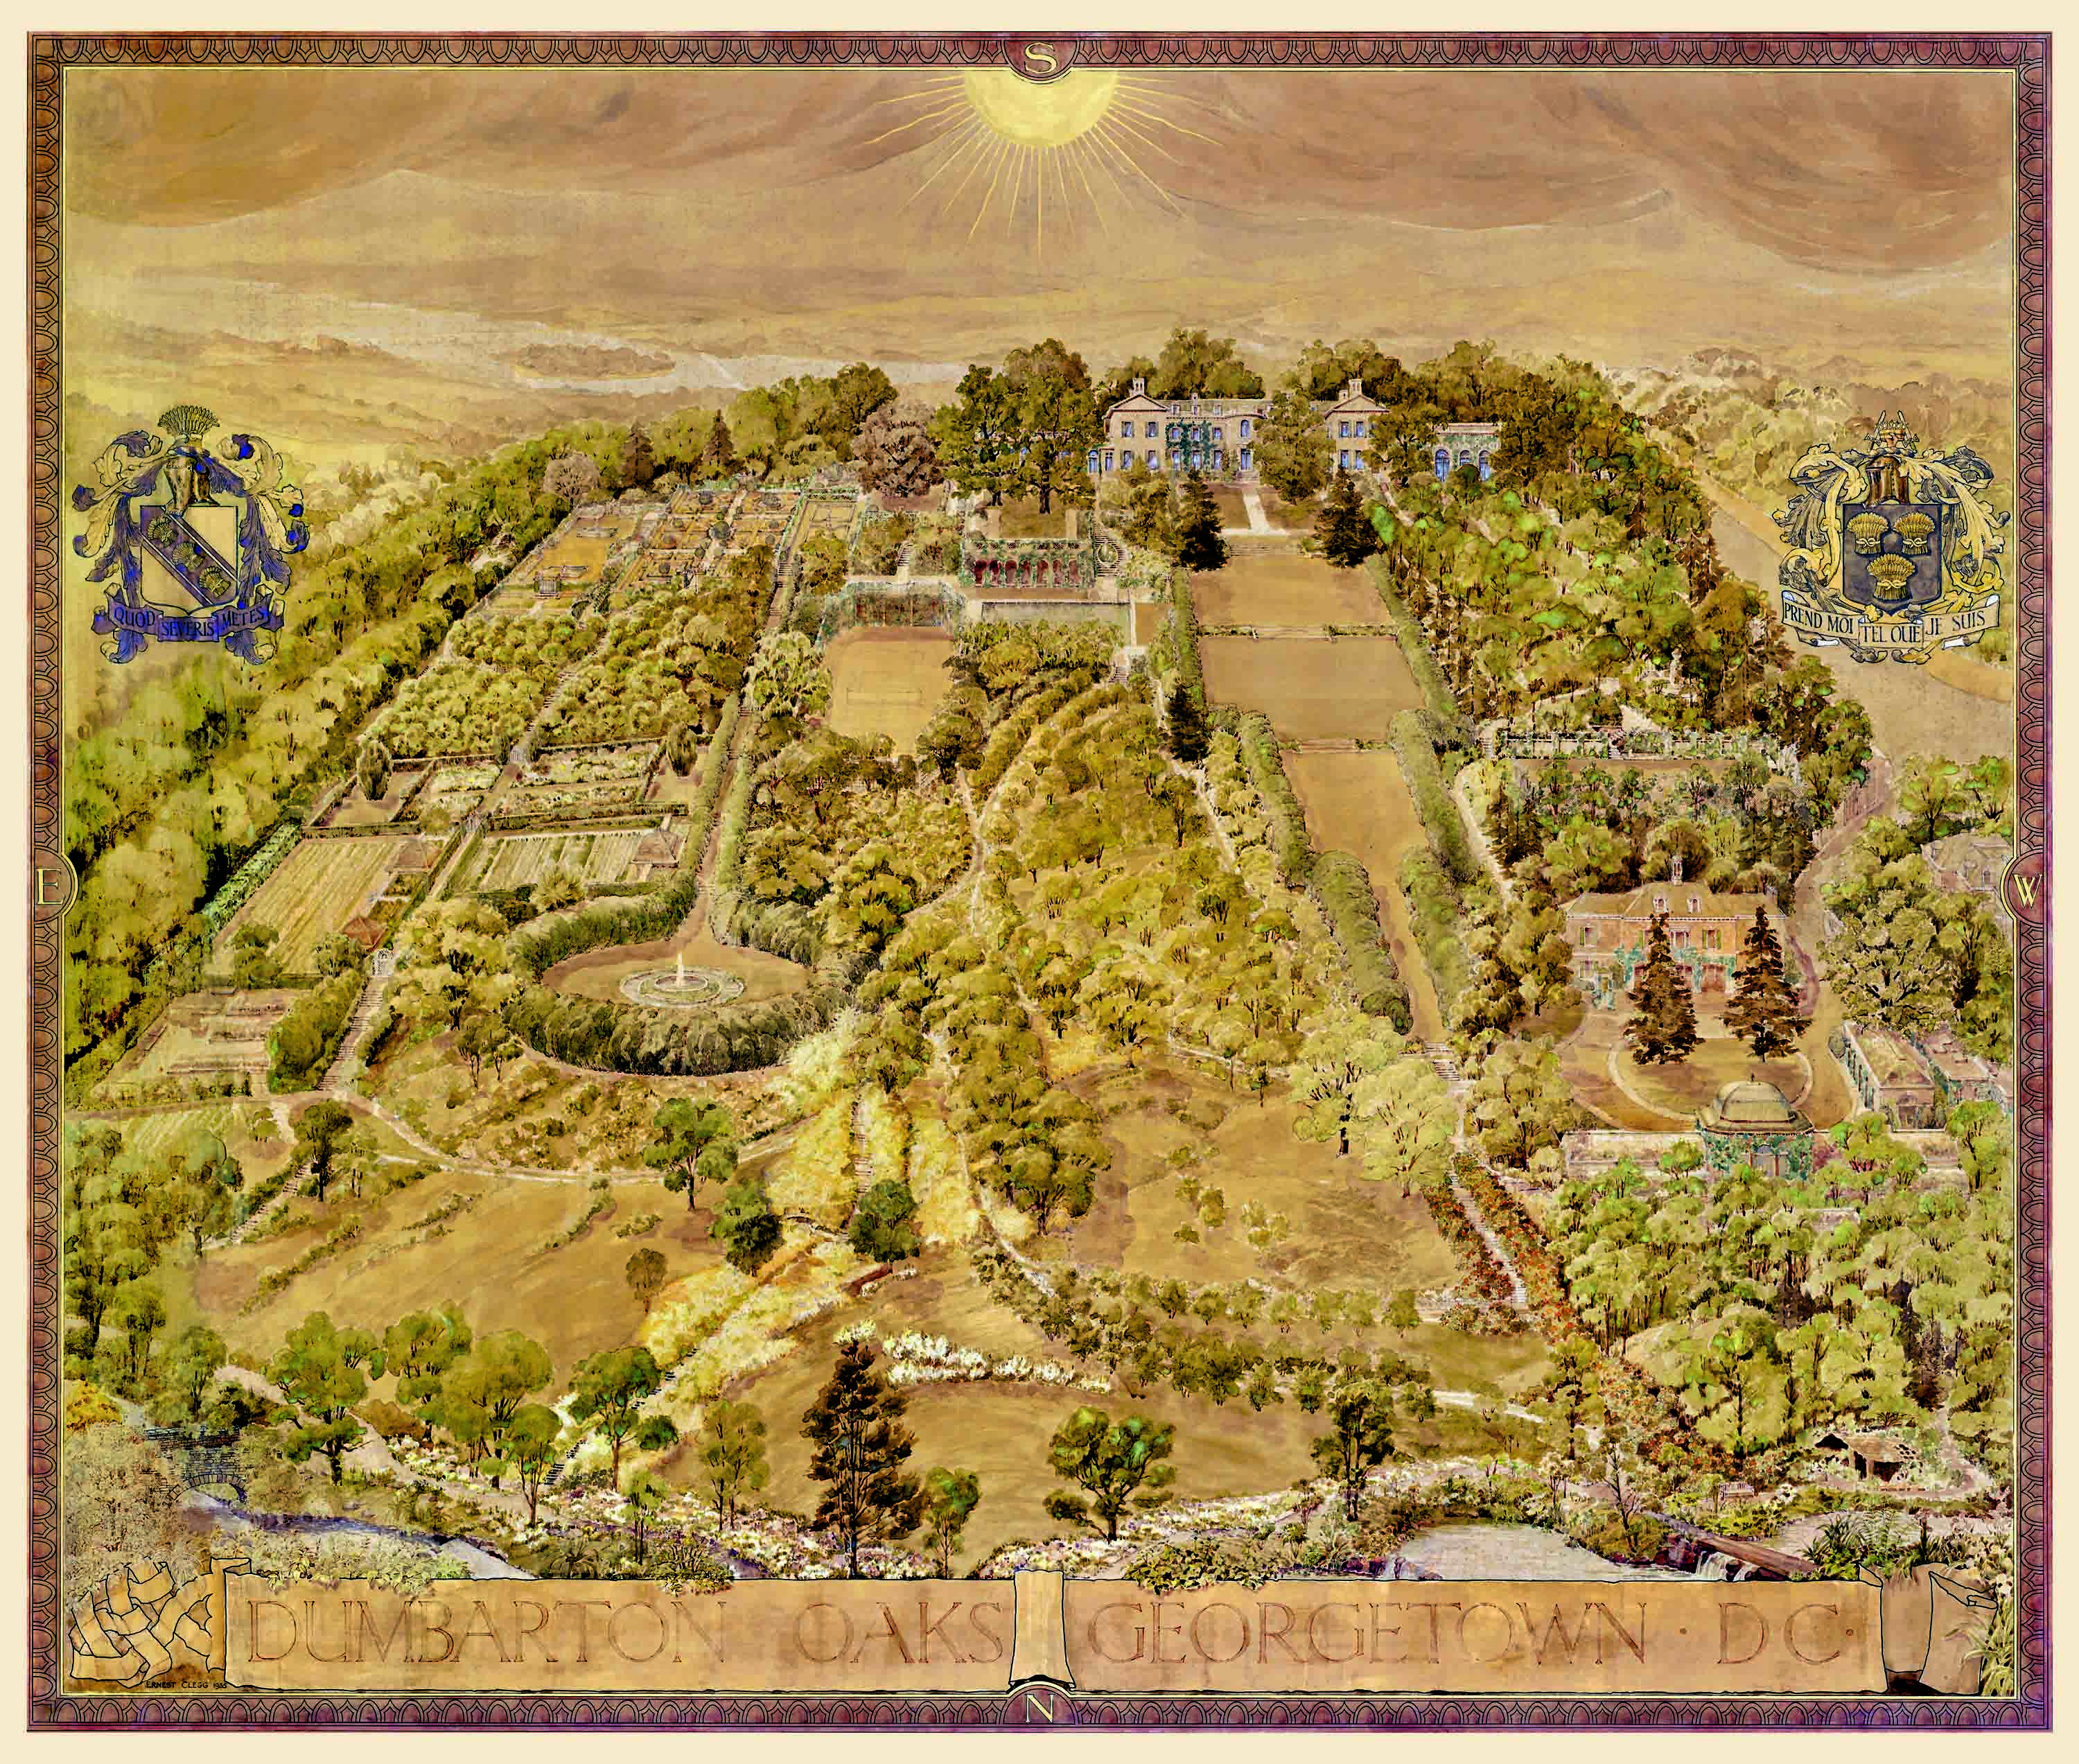 Ernest Clegg Map Of The Dumbarton Oaks Gardens 1935 Dumbarton